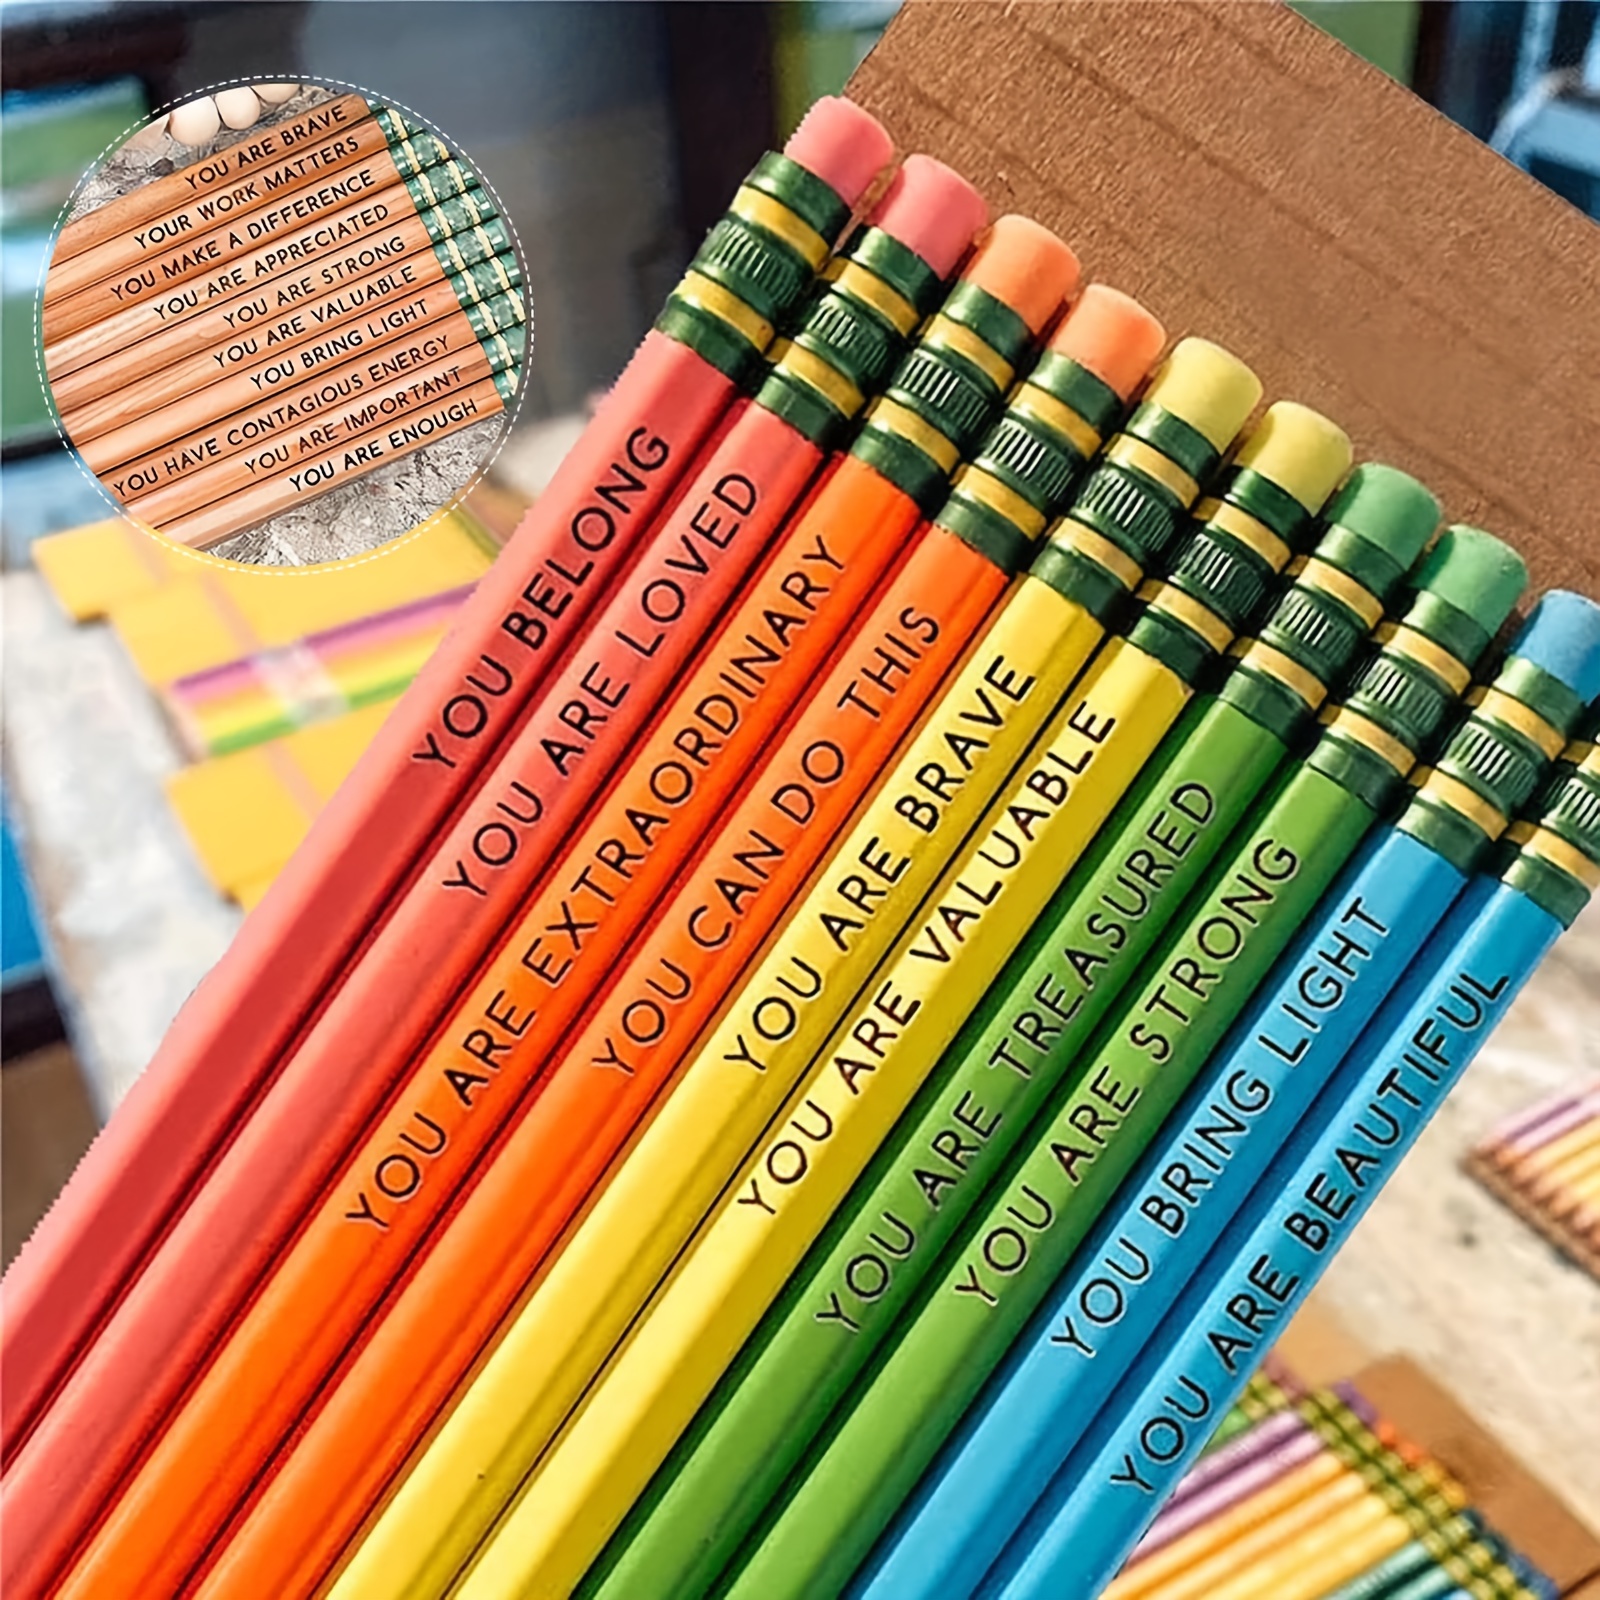 

10pcs Affirmation Pencil Set, Colored And Wood Color Pencil Set, Personalized Inspirational Compliment Wood Pencils